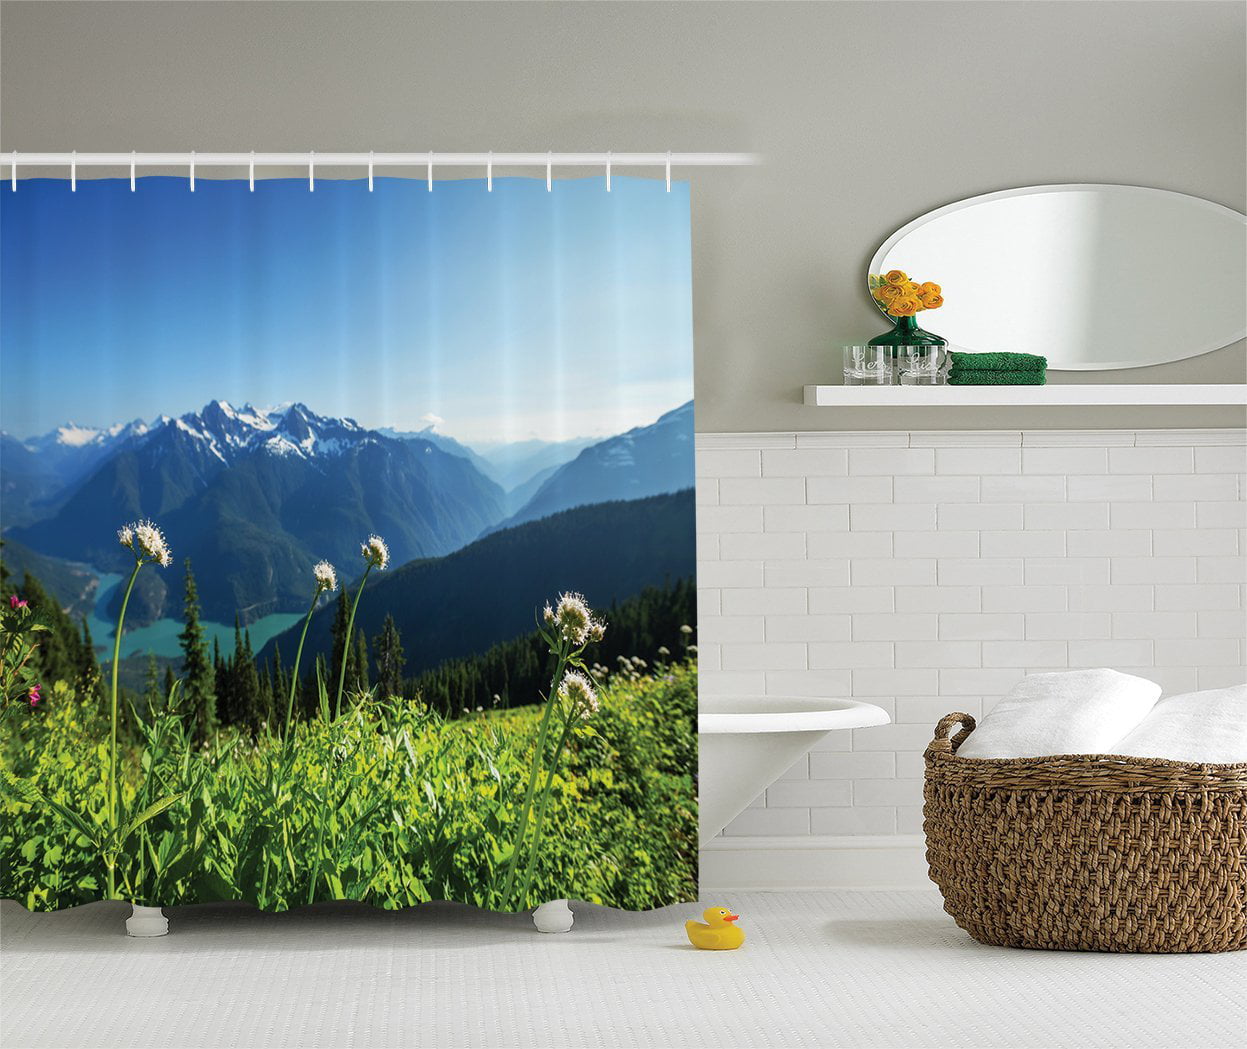 Details about   Red Retro Truck Farmland Forest Landscape Shower Curtain Set Bathroom Decor 72" 